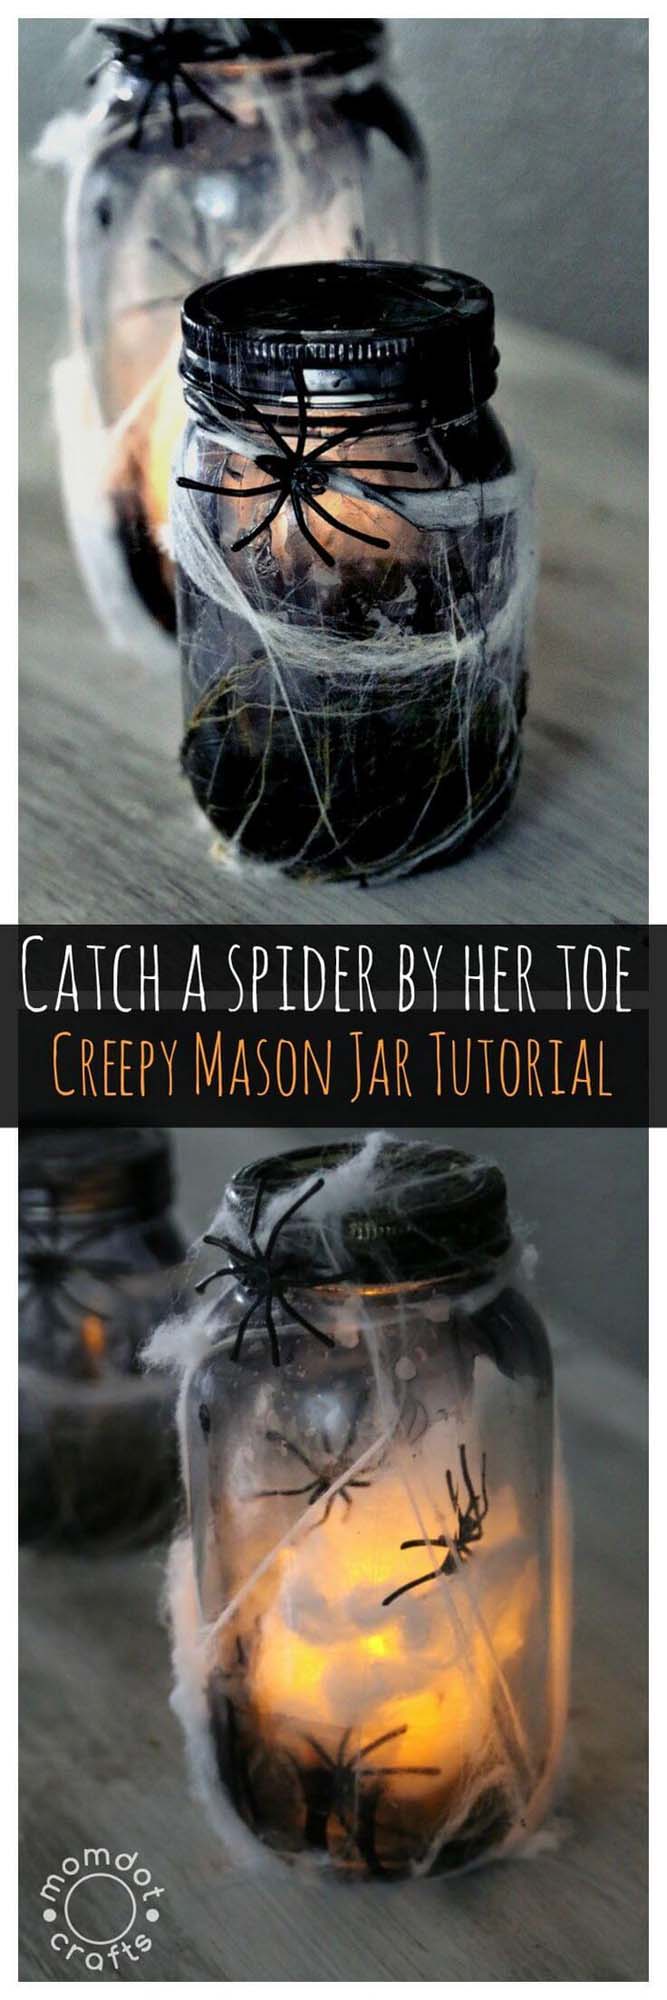 44. Super Scary Spider Web Luminaries #halloween #masonjar #crafts #decorhomeideas